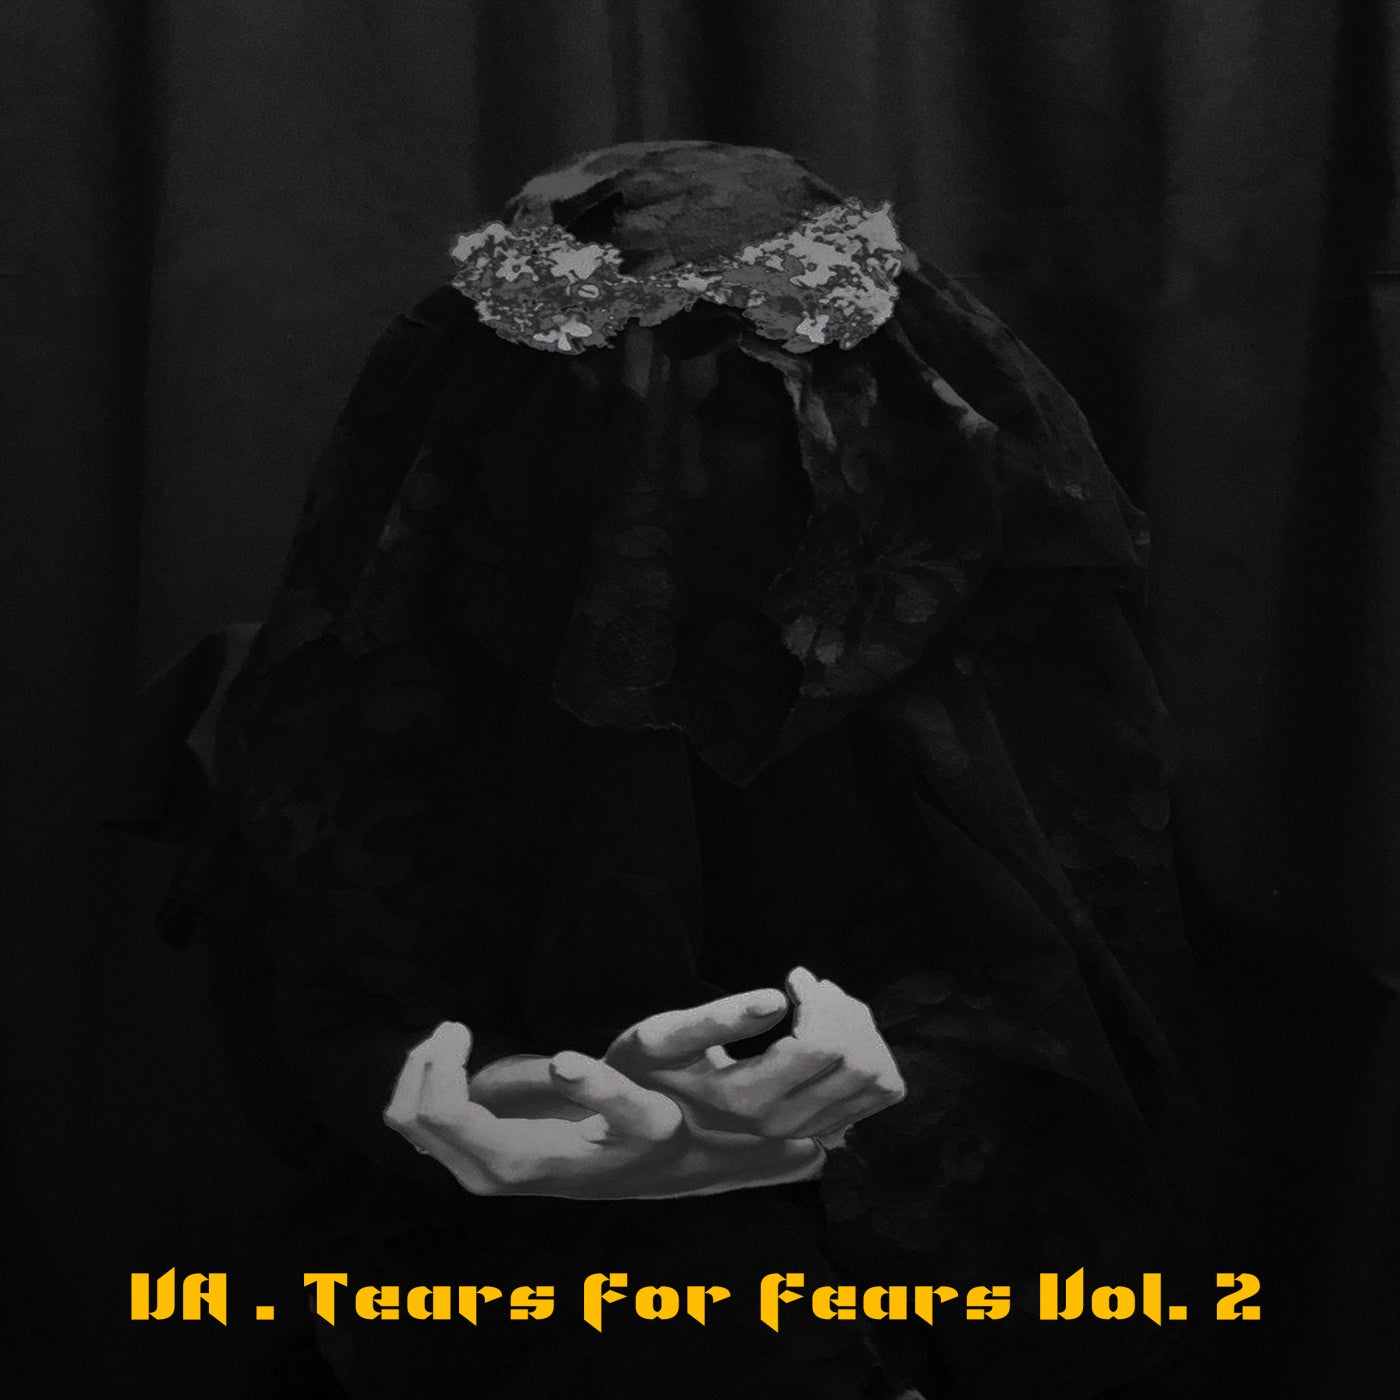 Tears for Fears Vol. 2